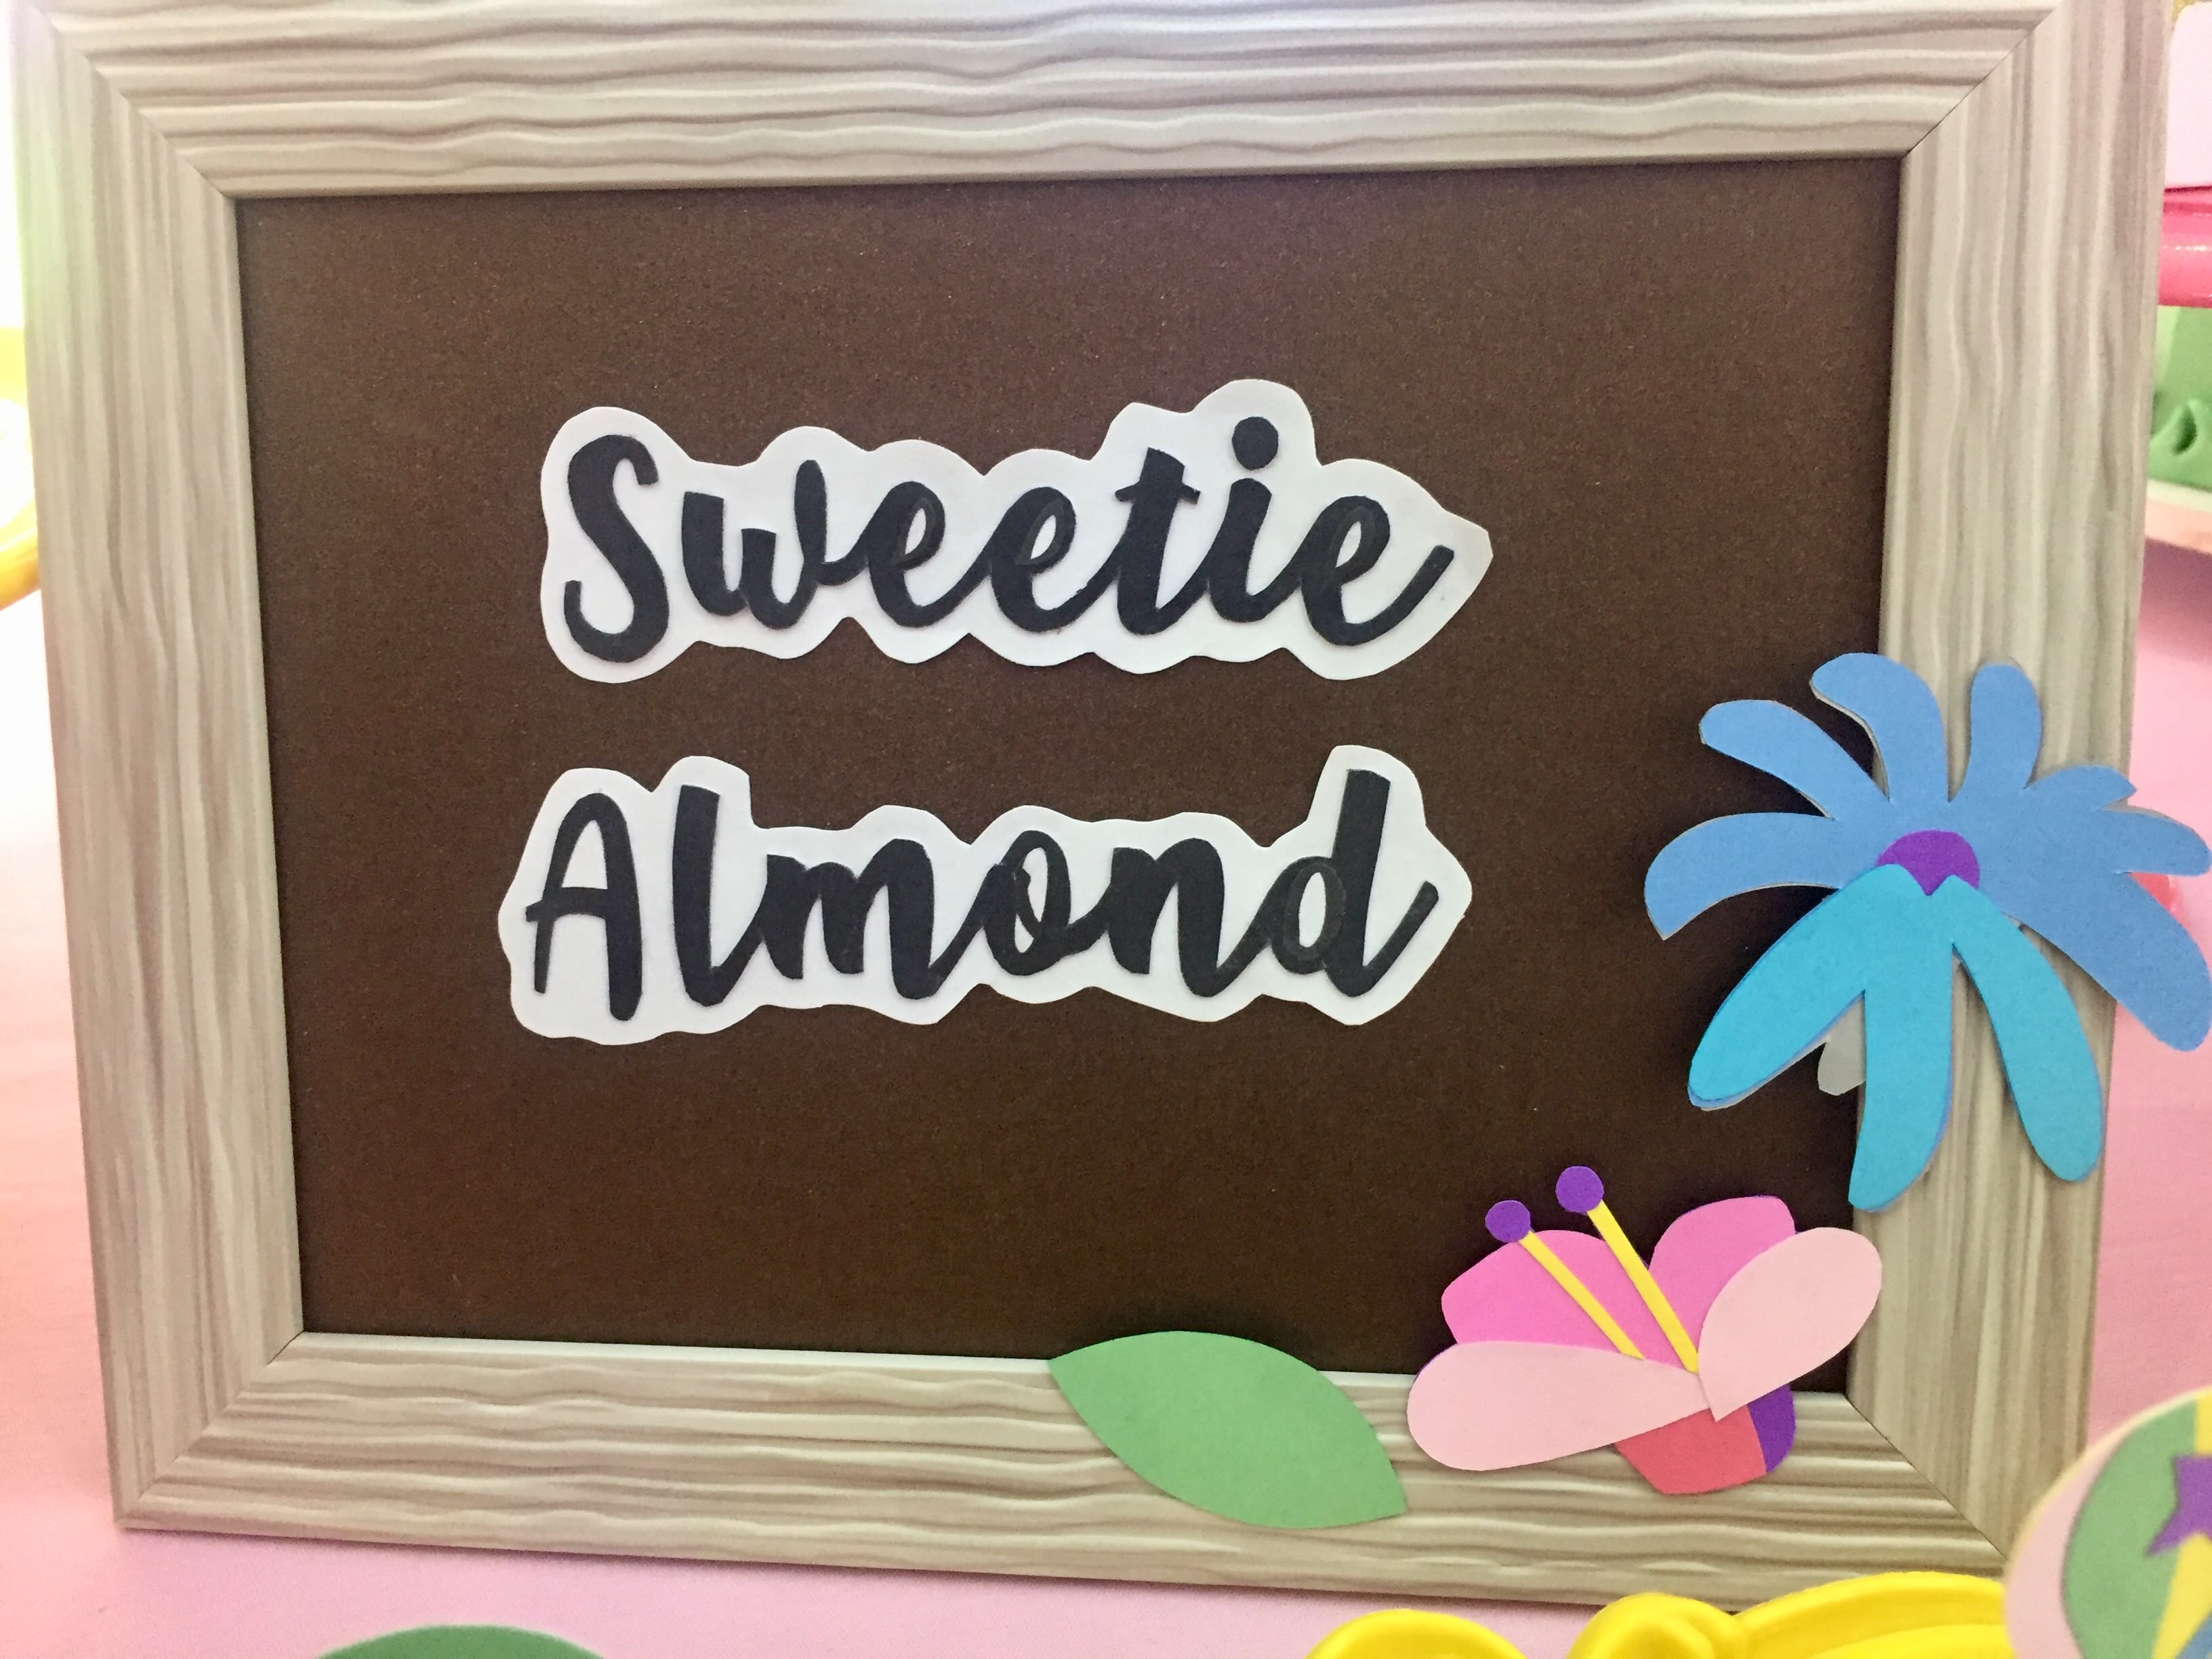 Sweetie Almond